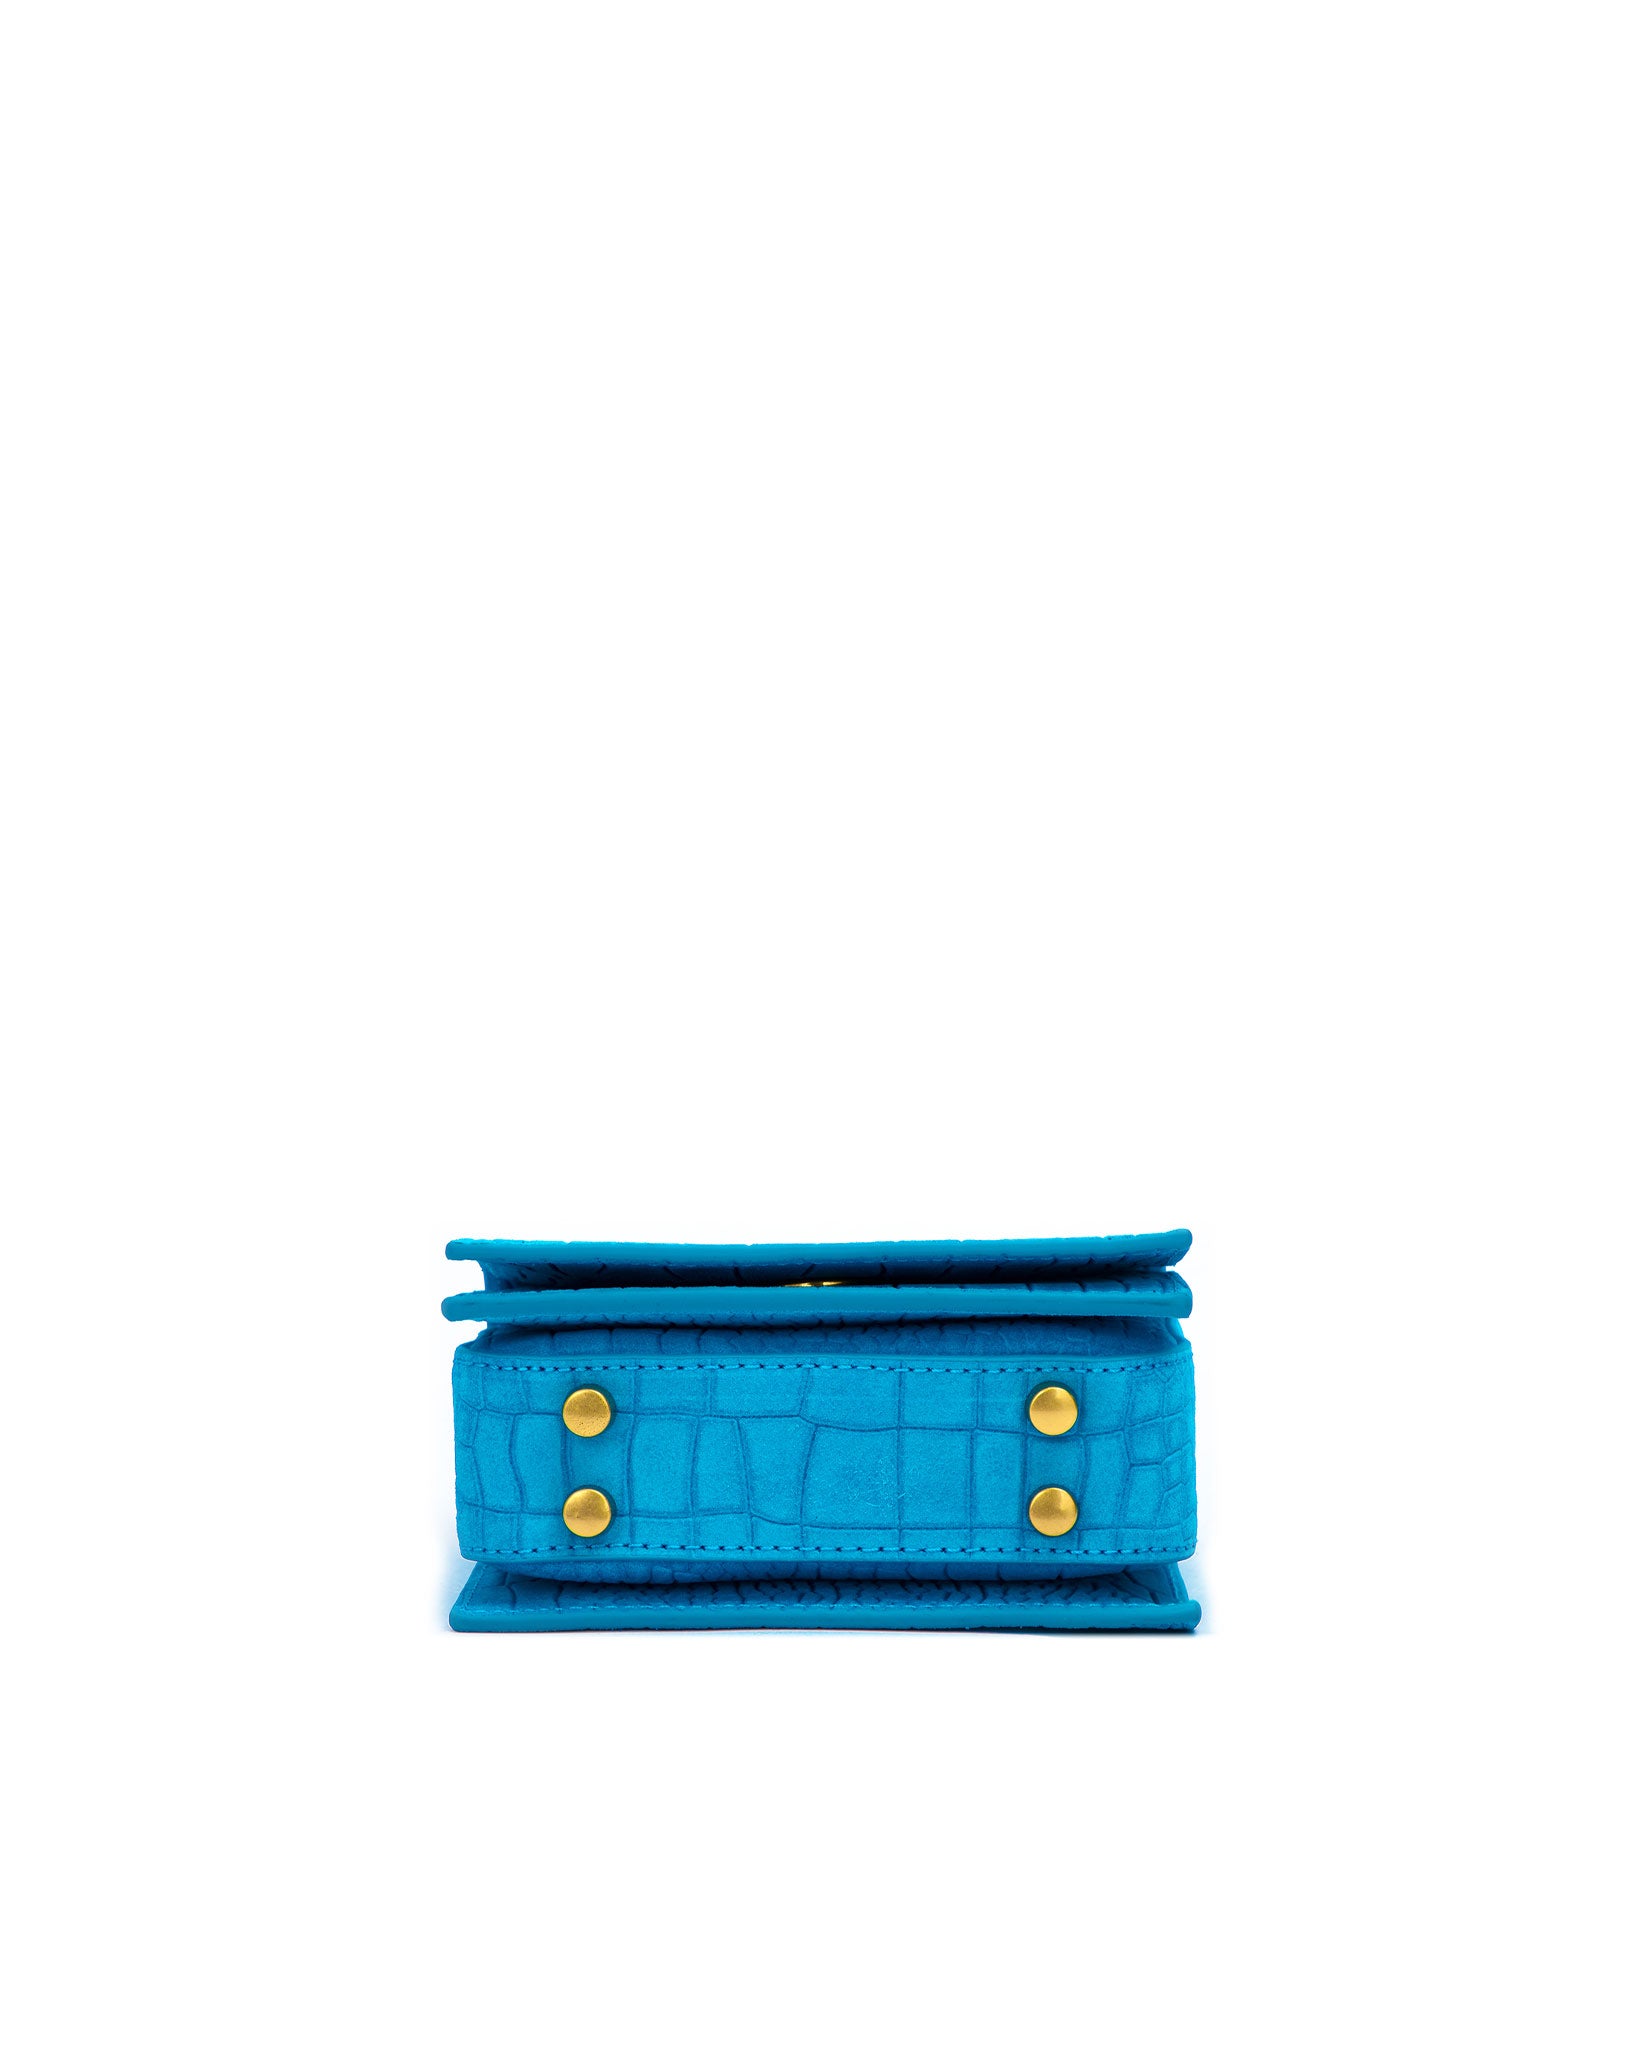 Brandon Blackwood New York - Mini Sophia Bag - Aqua Blue Croc Embossed w/ Gold Hardware